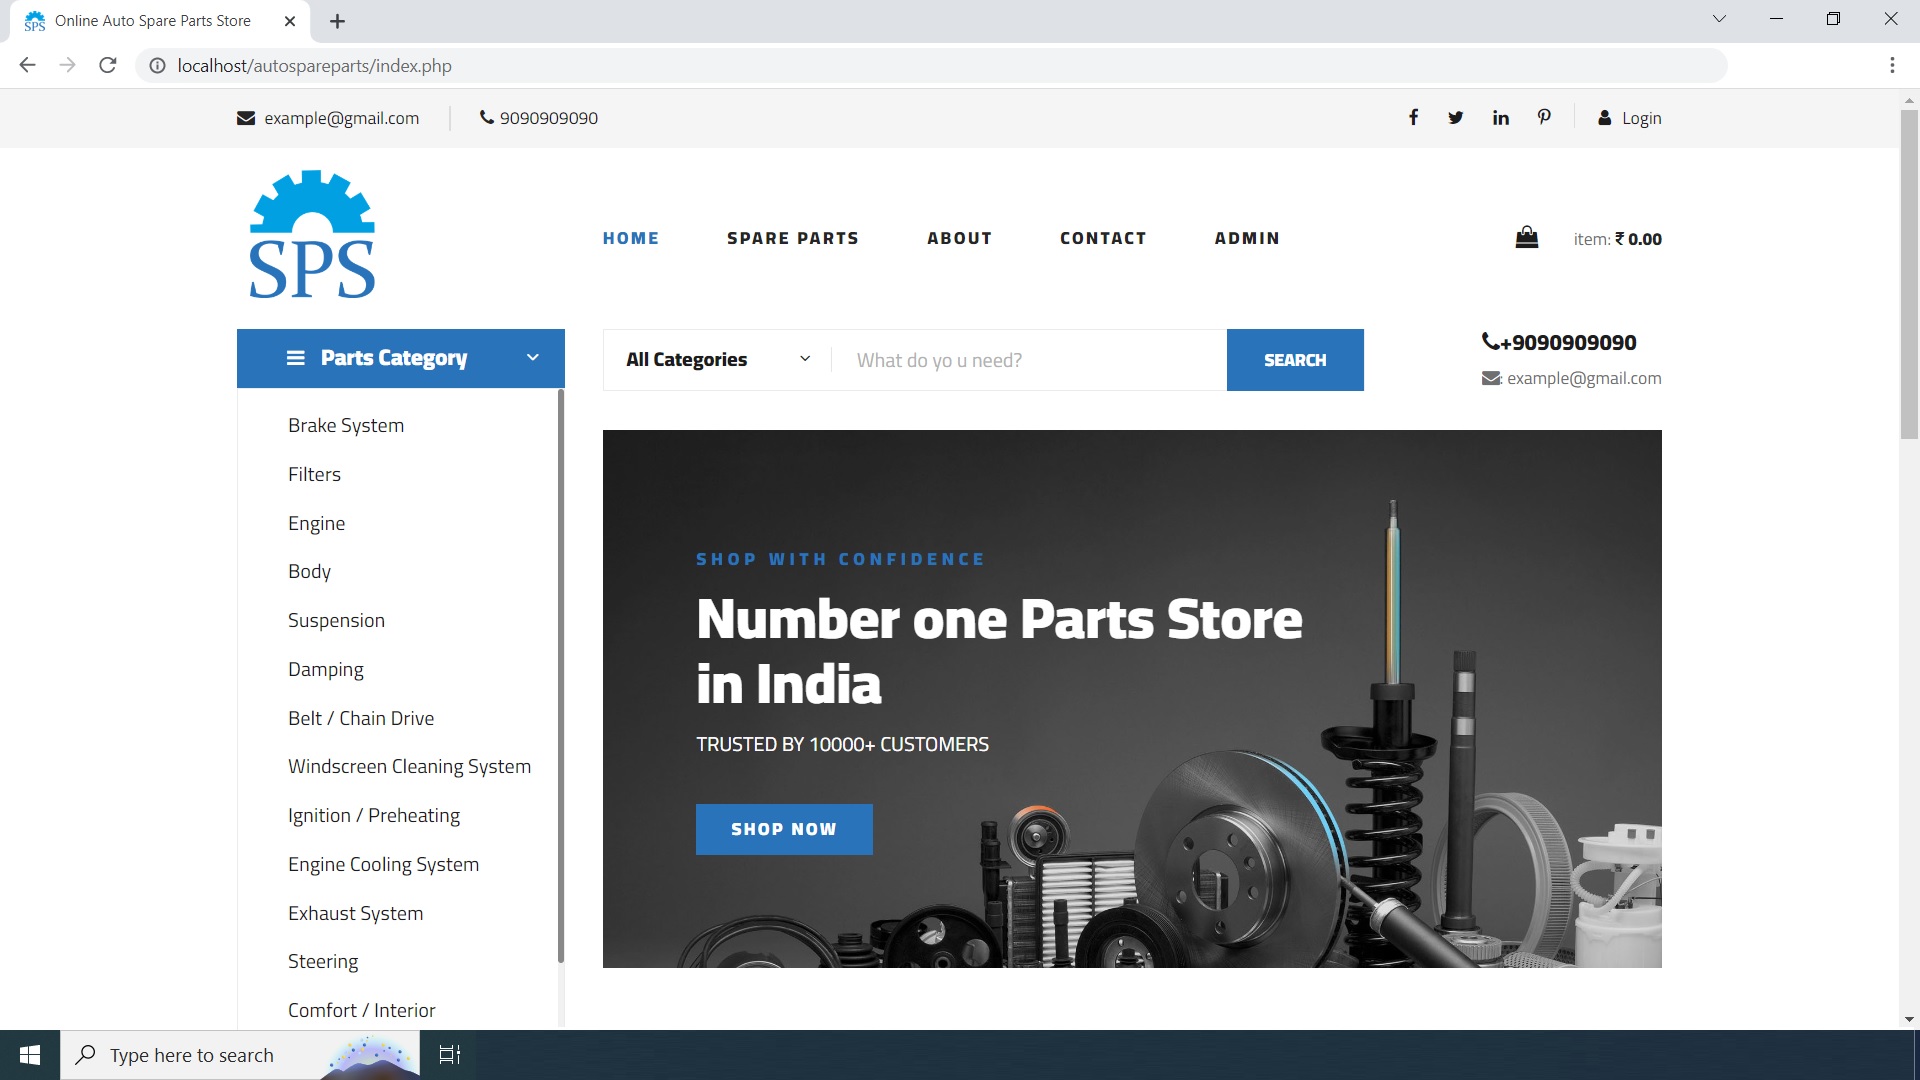 Online Auto Spare Parts Store Website